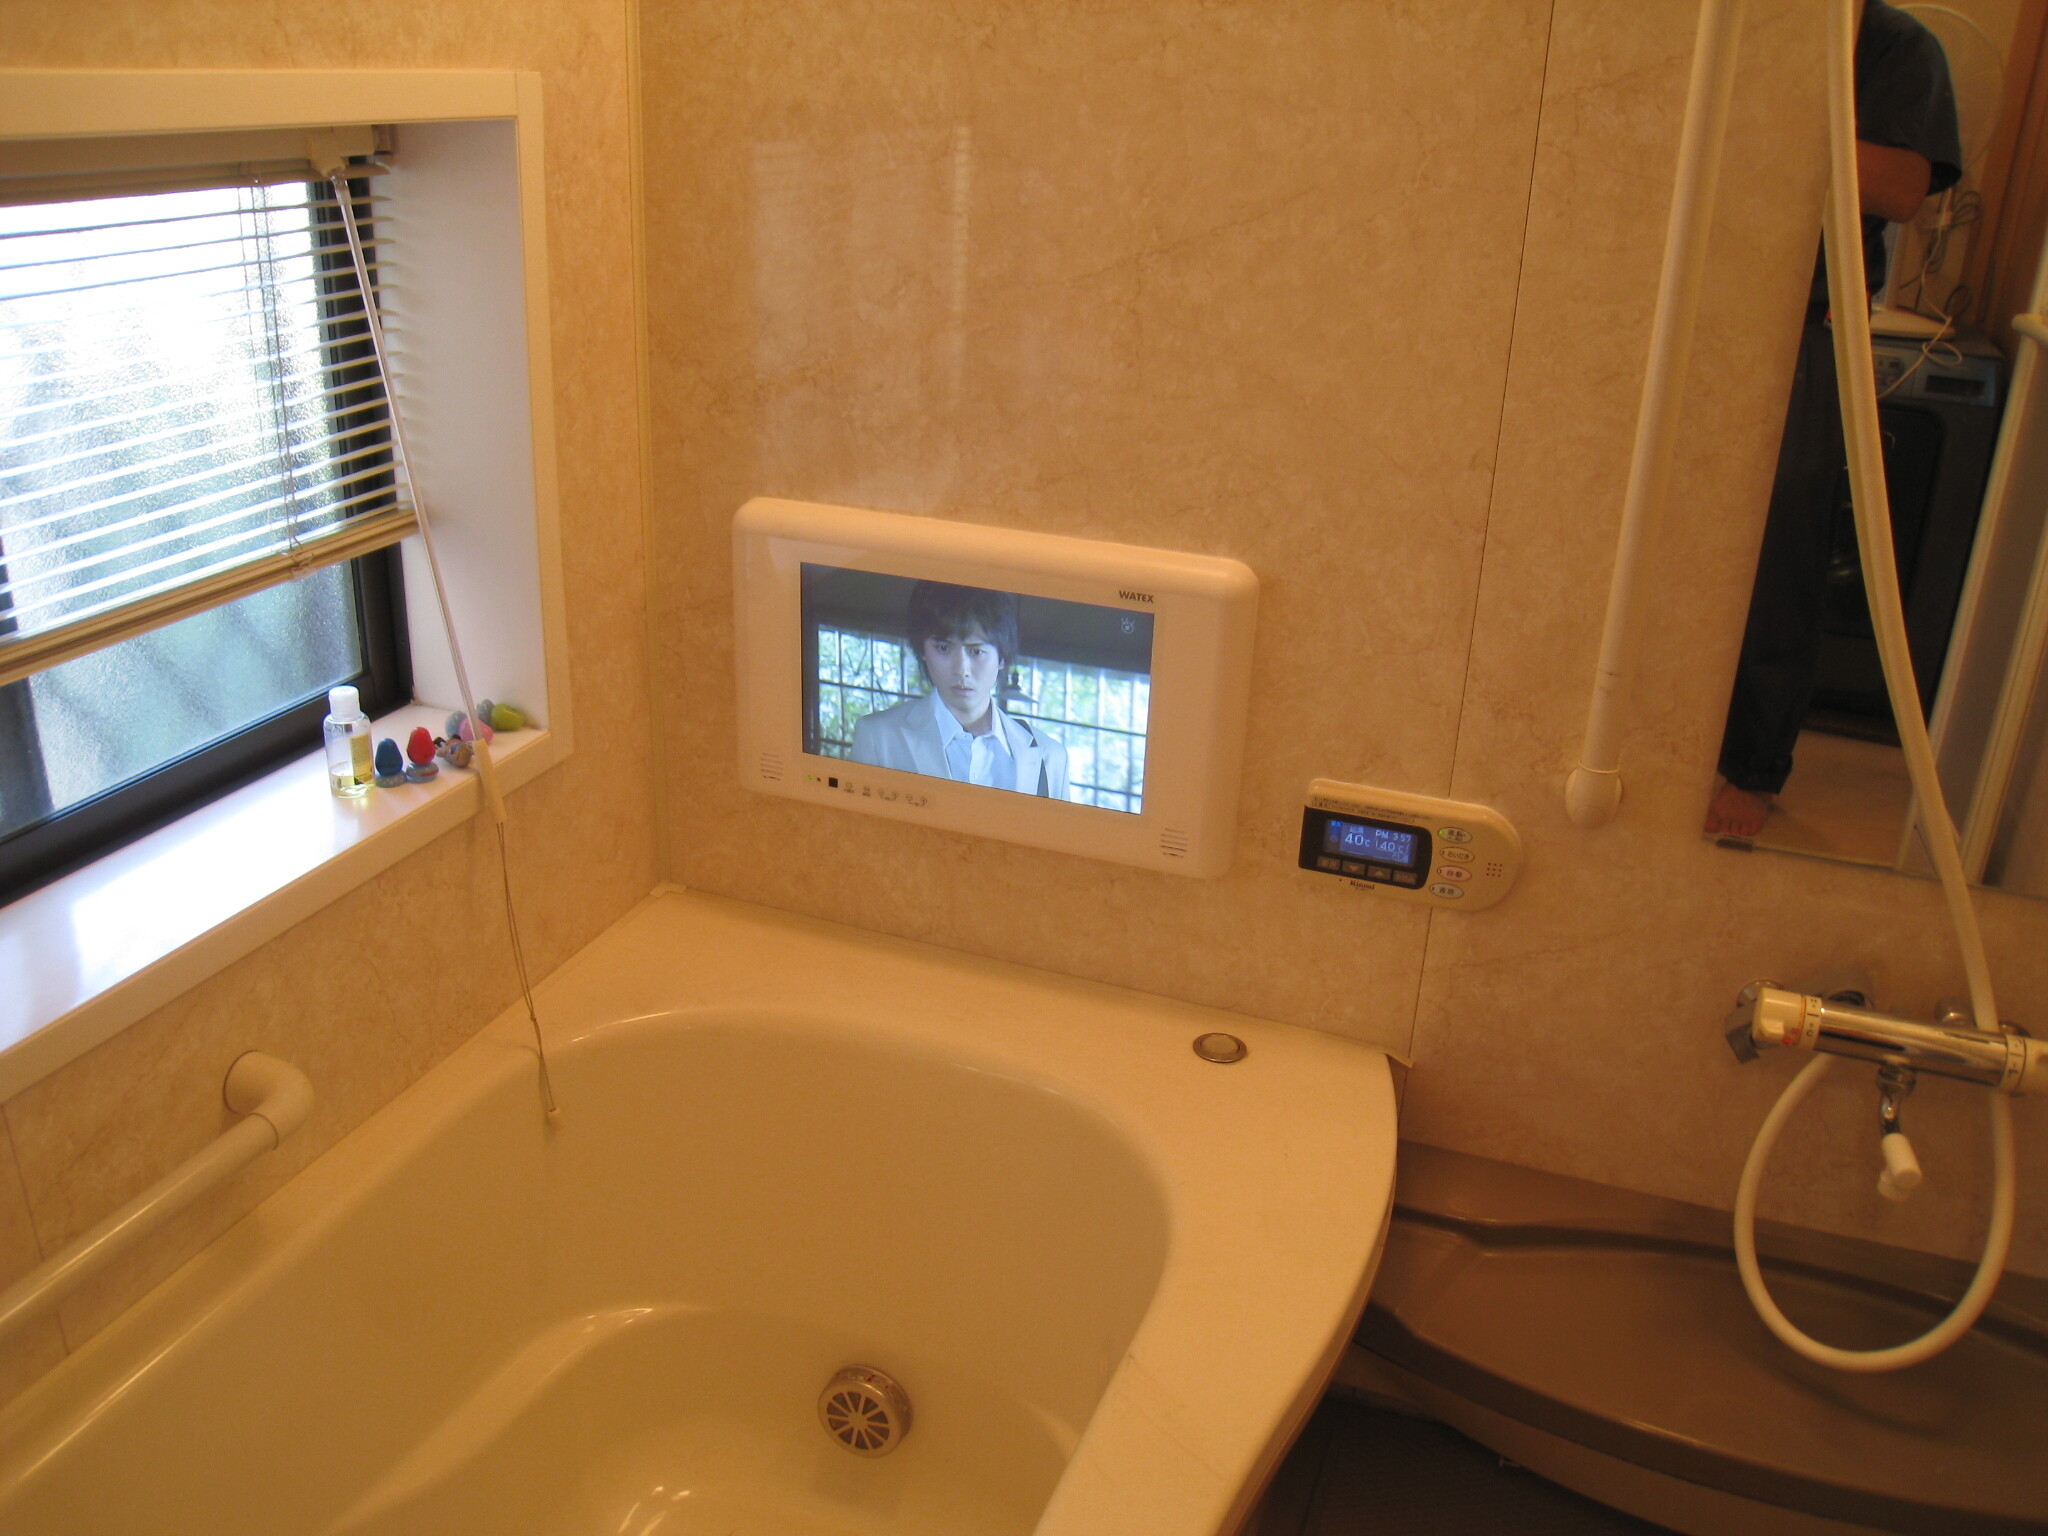 TＯTＯ 浴室テレビ - テレビ